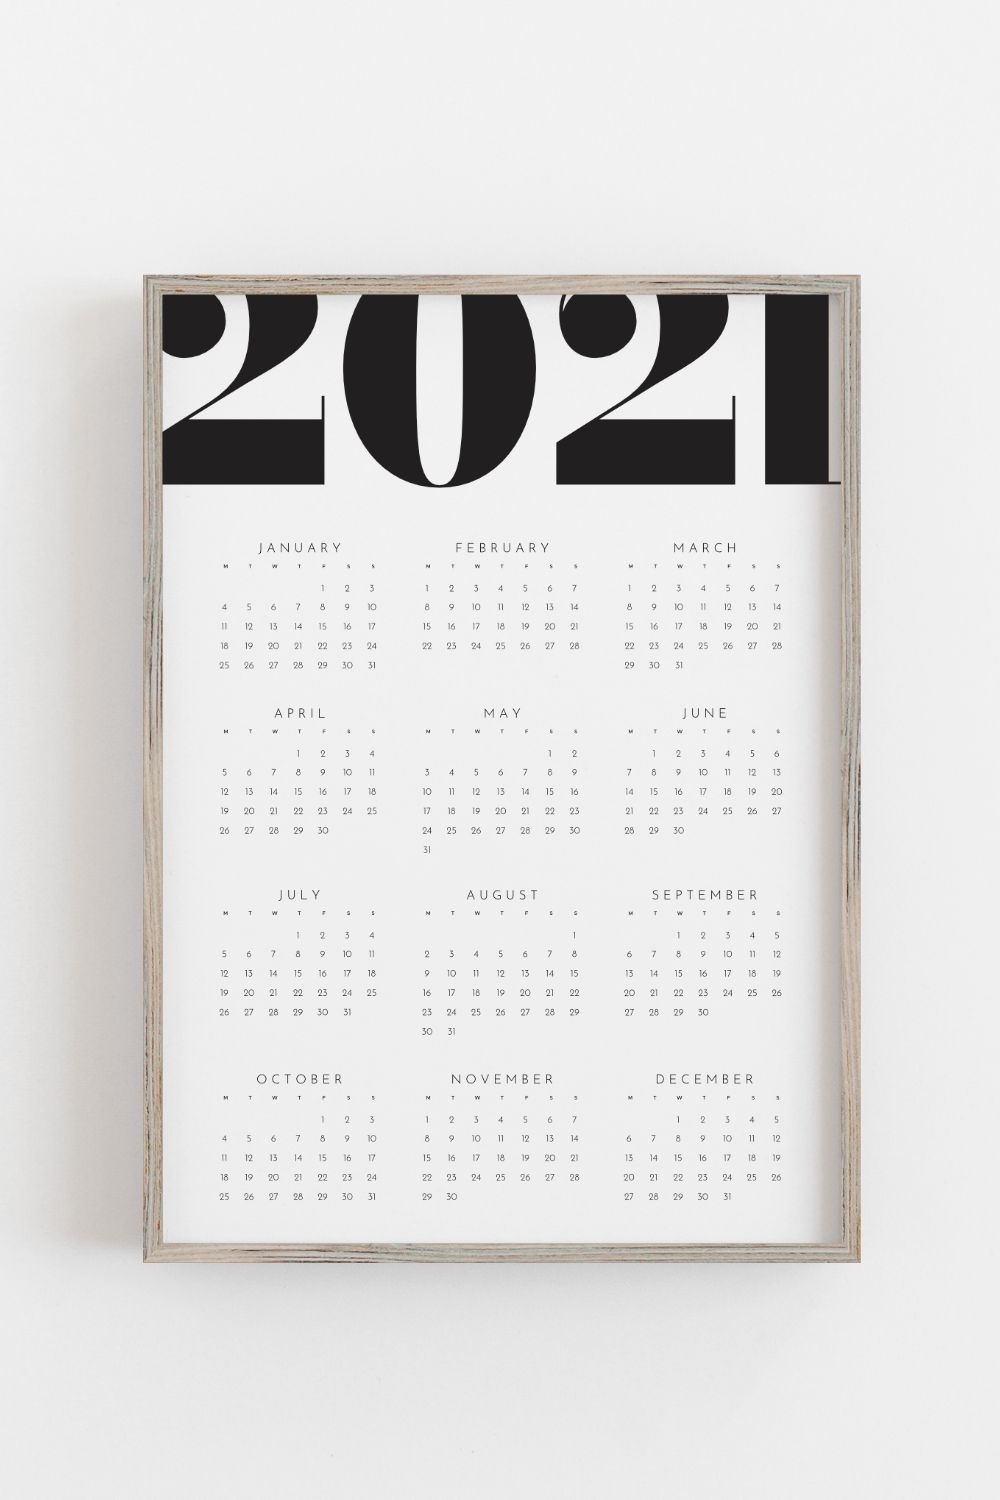 Printable Calendar 2021 Yearly Wall Calendar Year At A